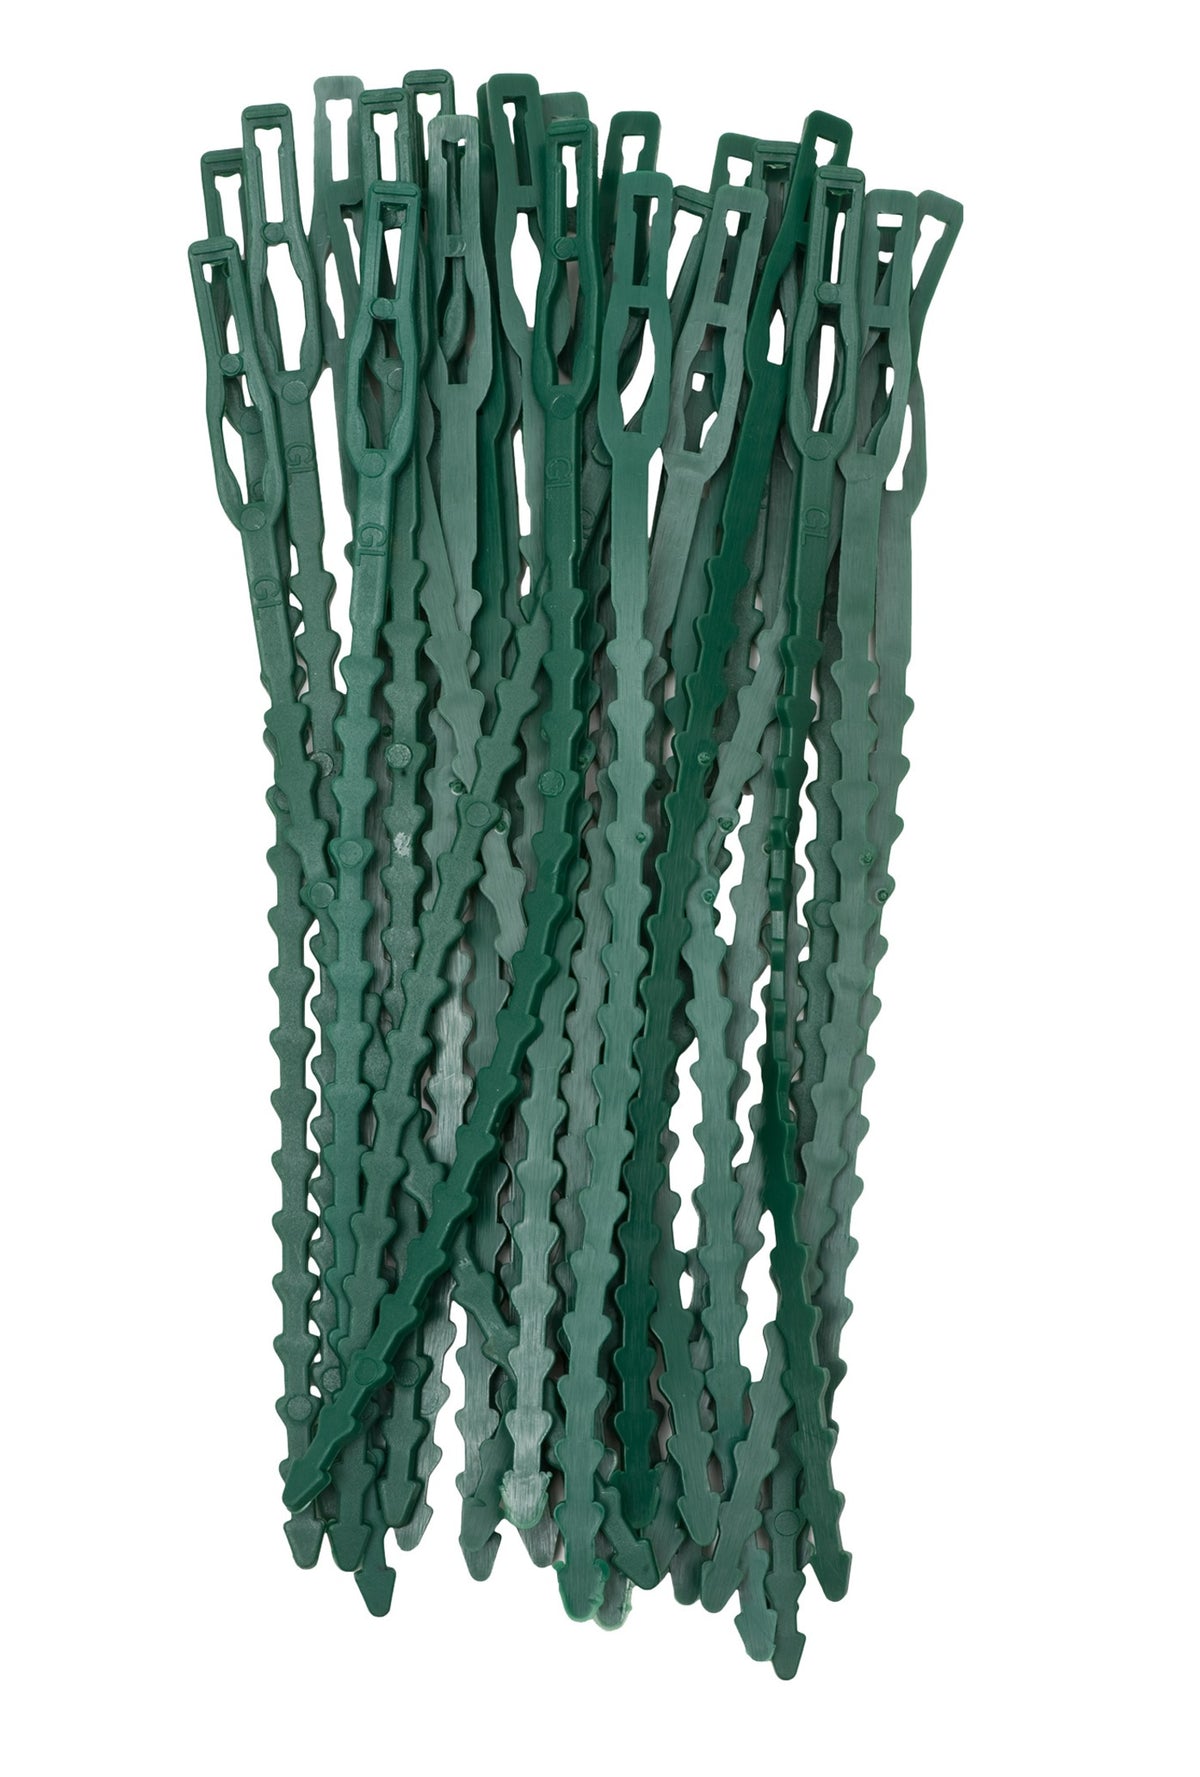 Gardener's Blue Ribbon T013B Sturdy Garden Ties, Plastic, 30-Pack